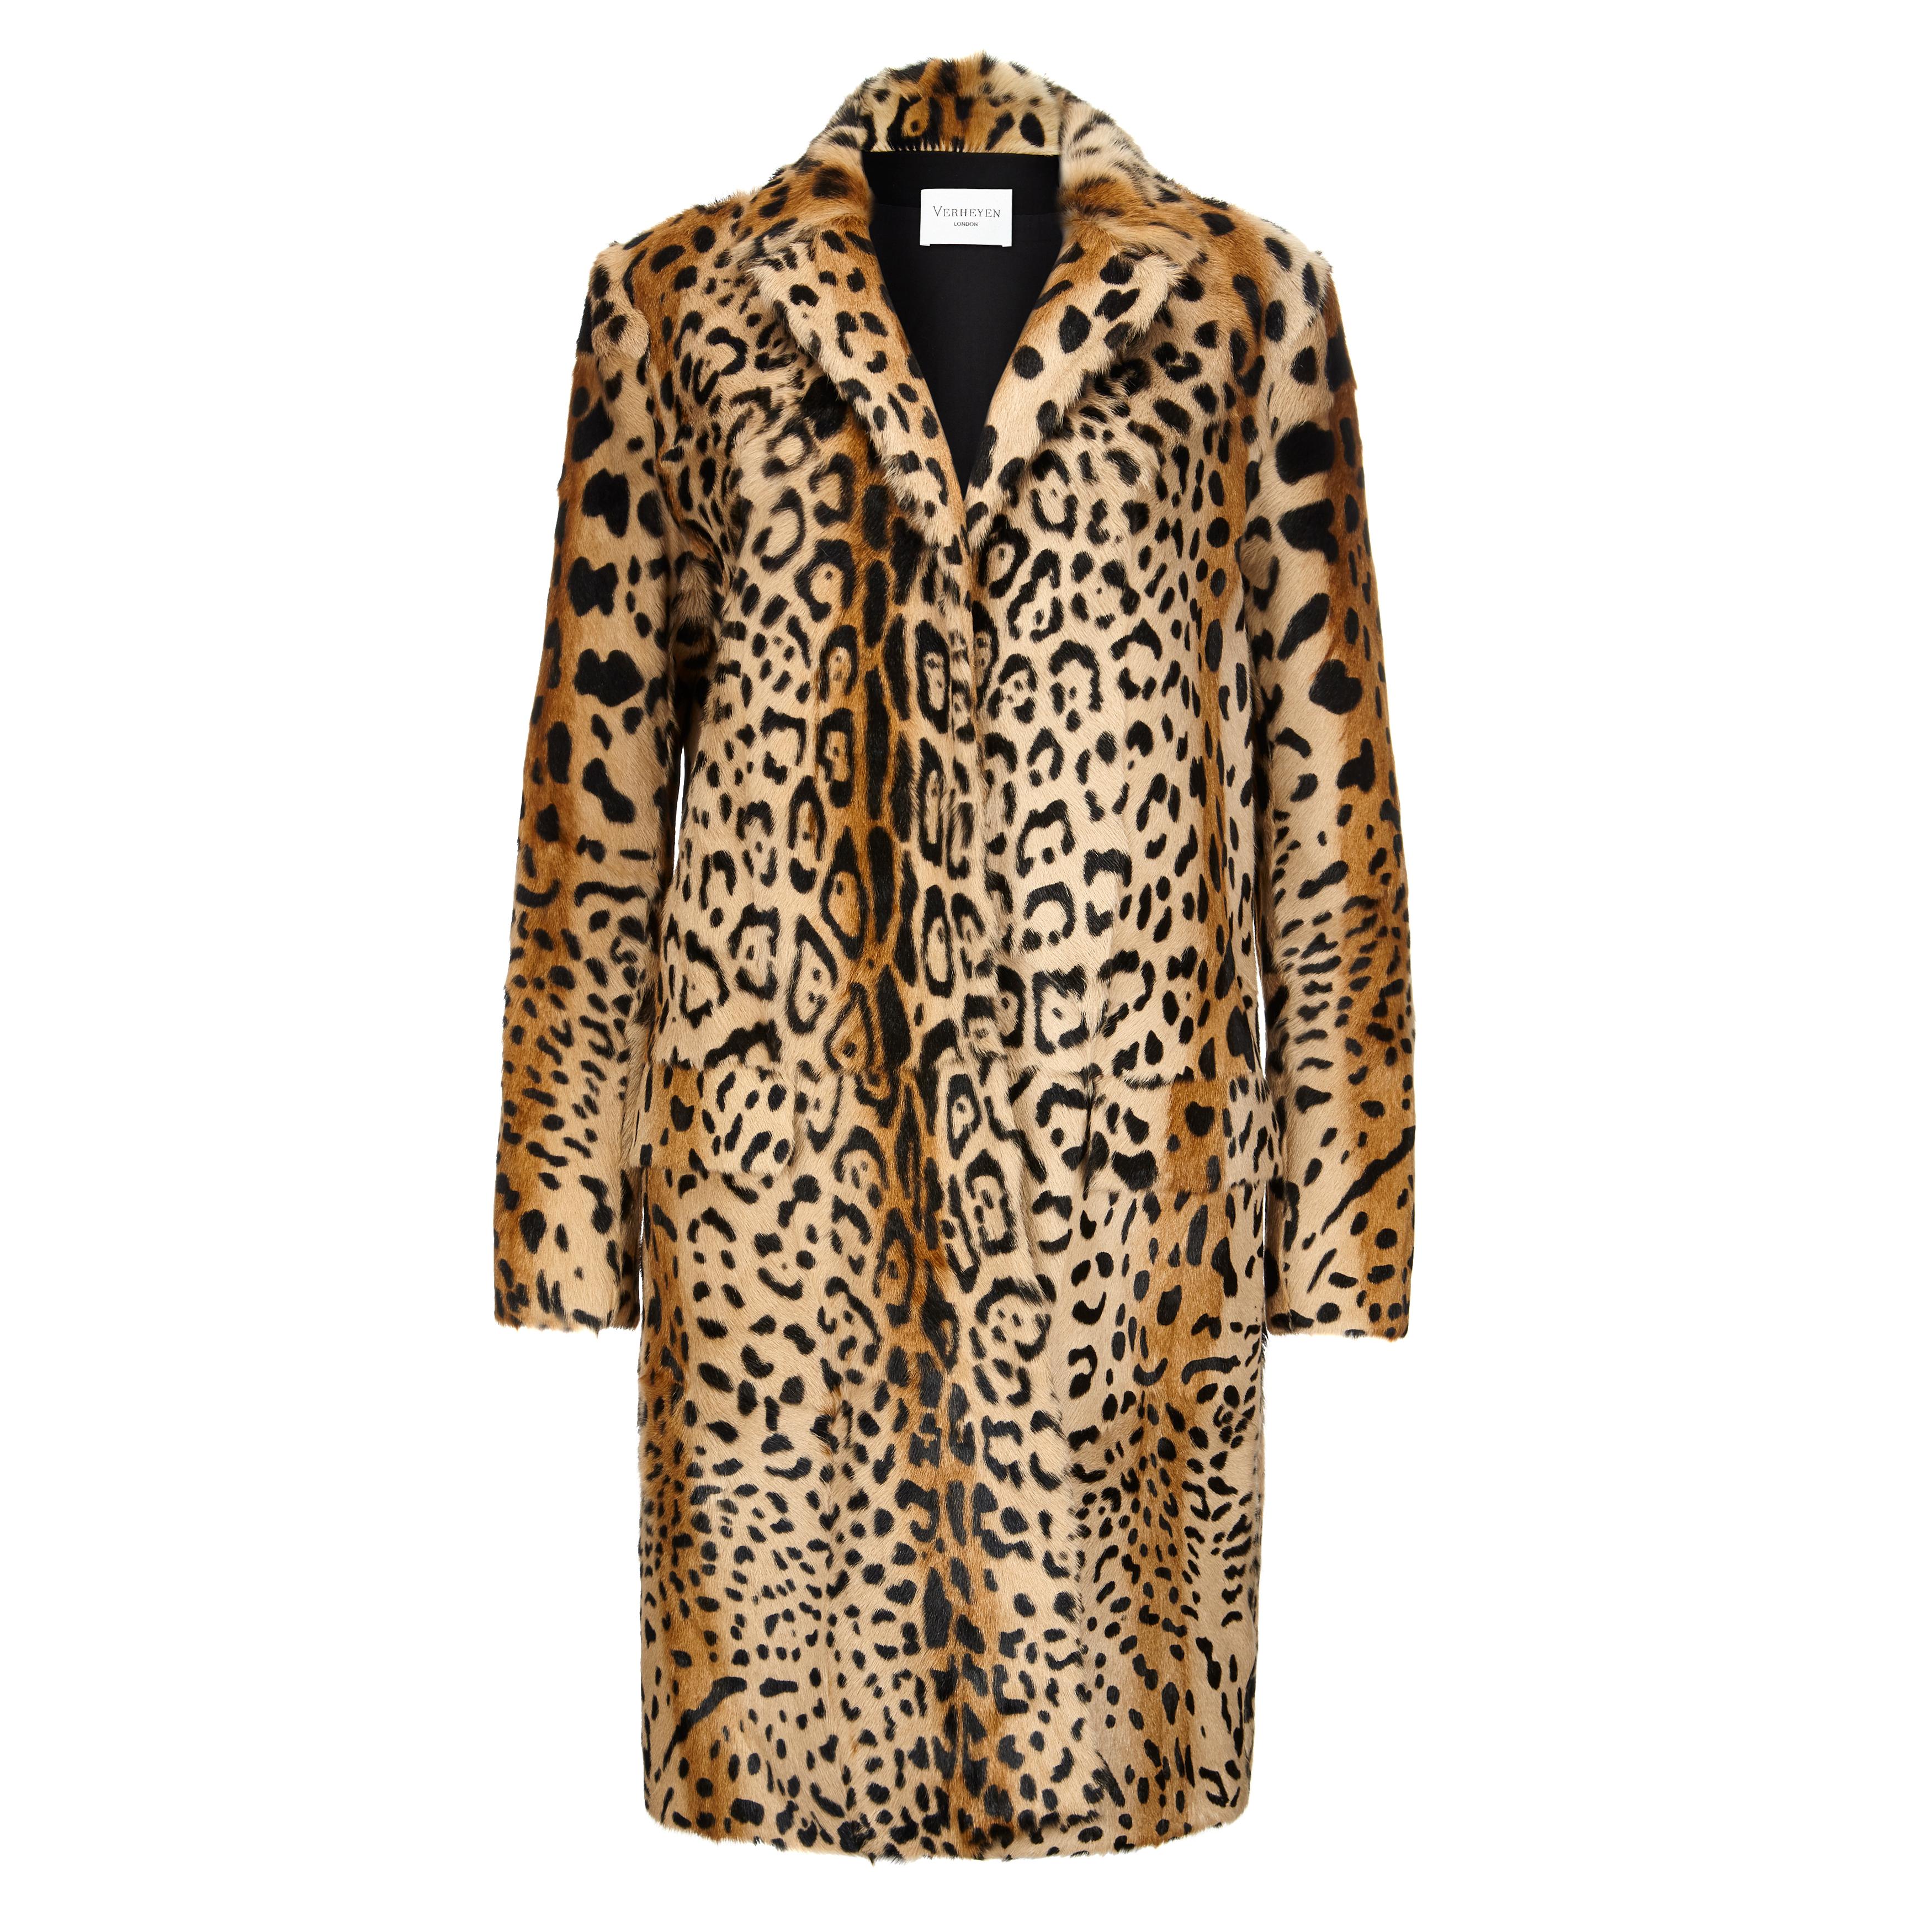 Verheyen London Leopard Print Coat in Natural Goat Hair Fur Size 8-10